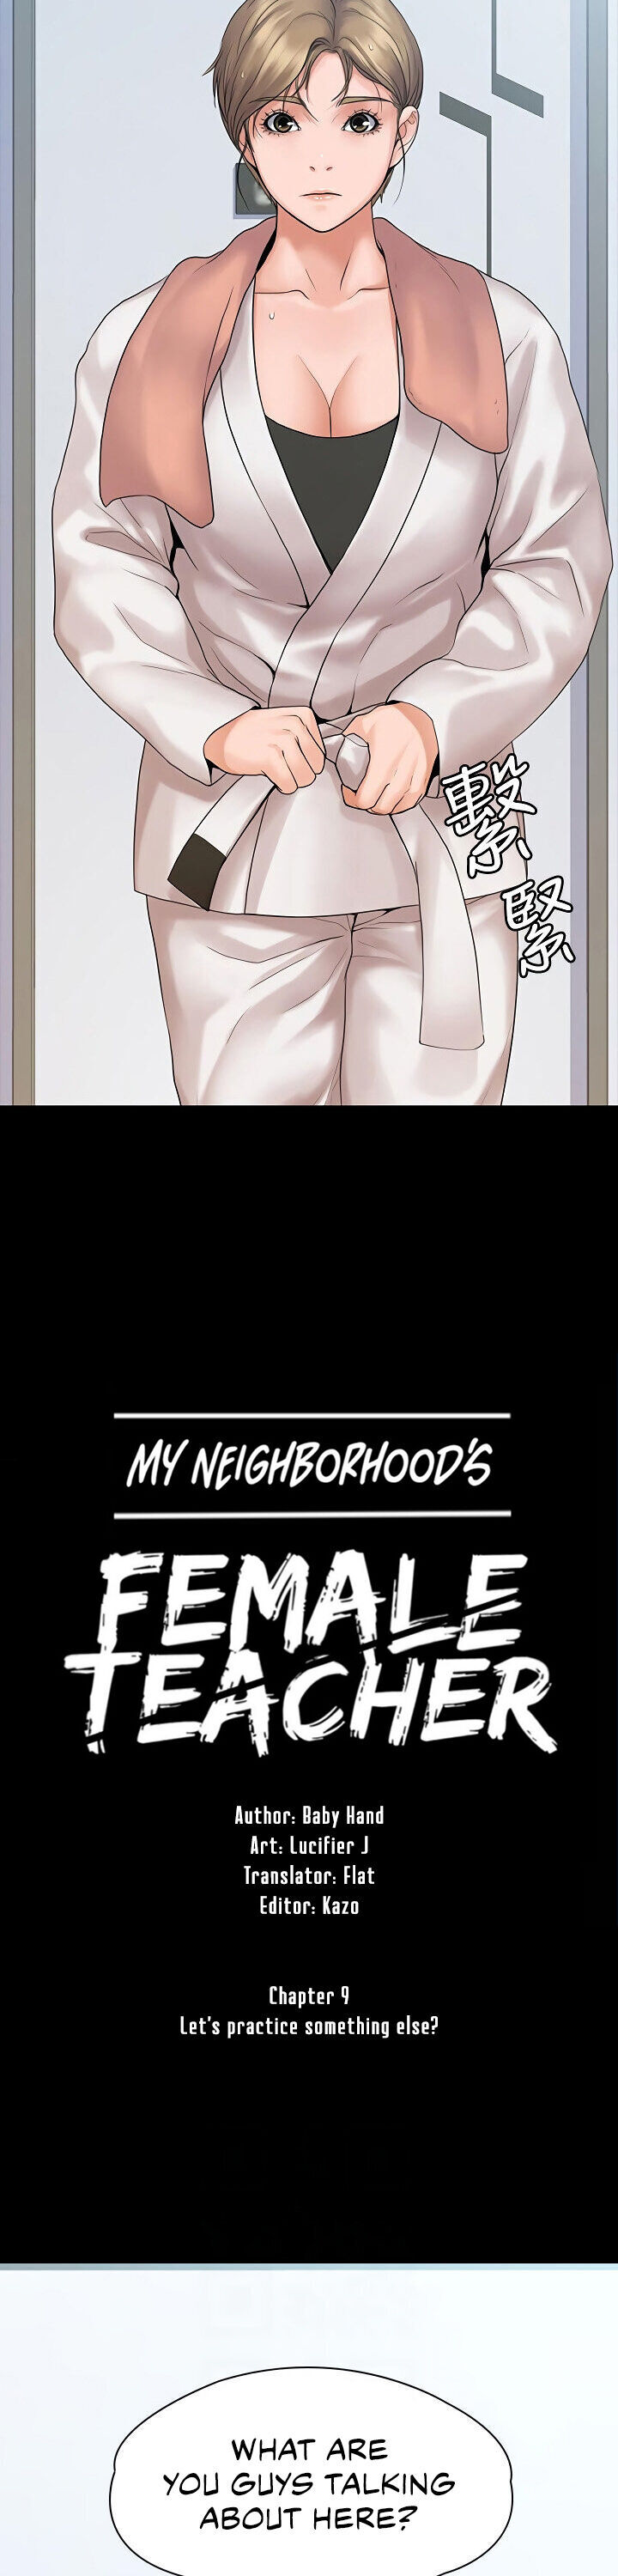 My Neighborhood’s Female Teacher - Chapter 9 Page 3